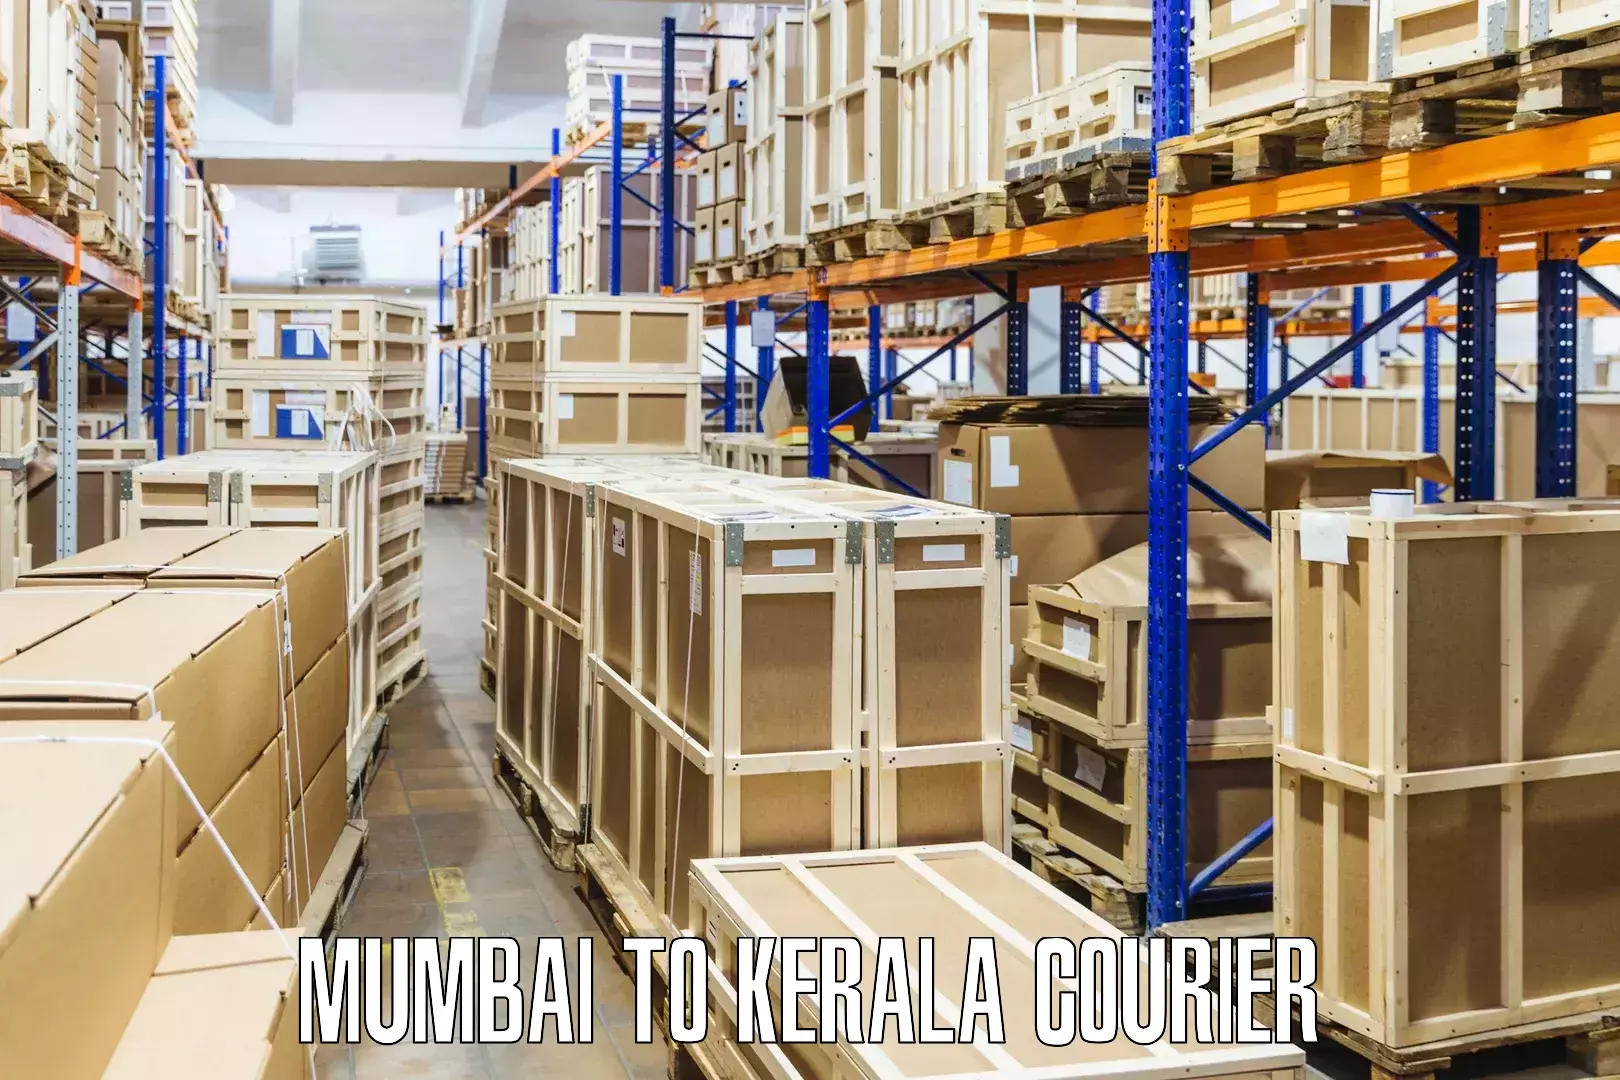 Express courier facilities Mumbai to Thiruvananthapuram